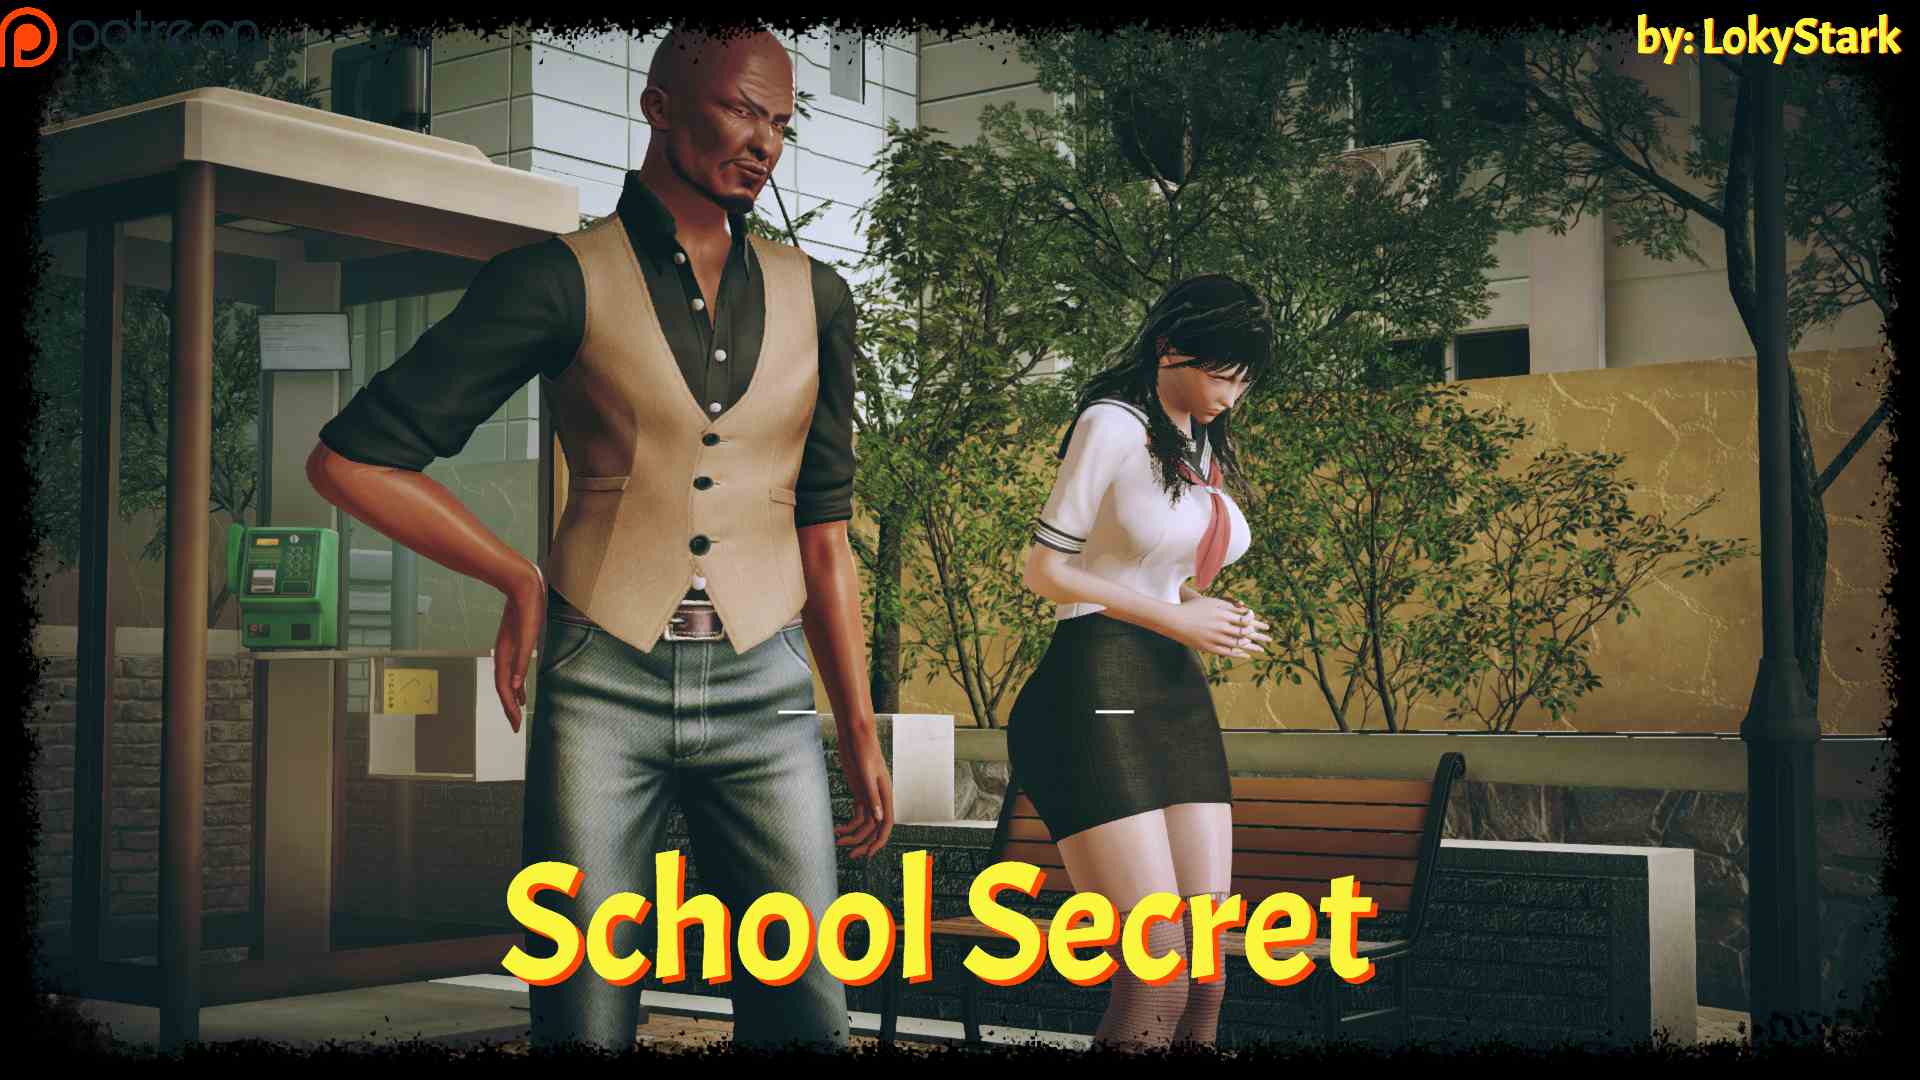 School Secret [LokiStark] Adult xxx Porn Game Download